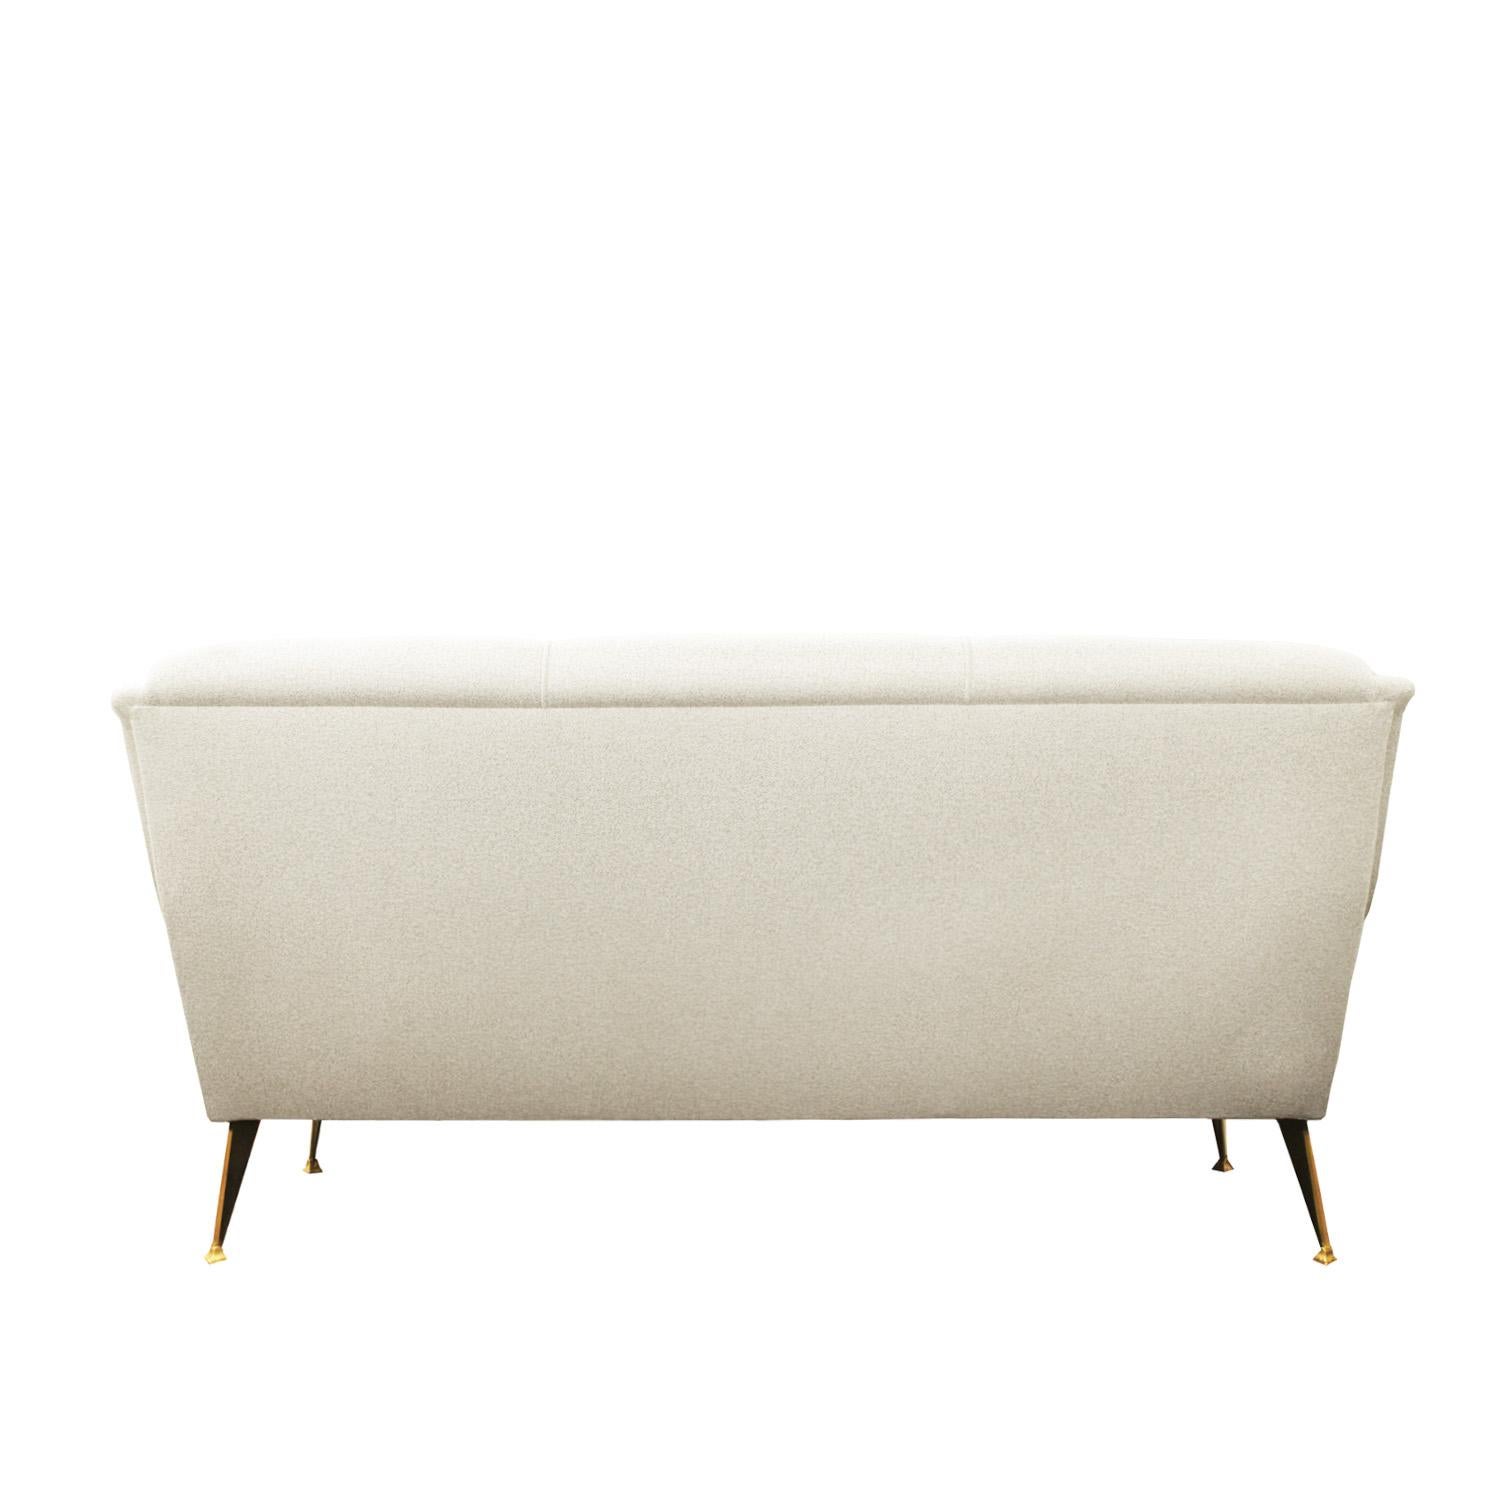 Italian Marco Zanuso Style Modern Sofa 1960s For Sale